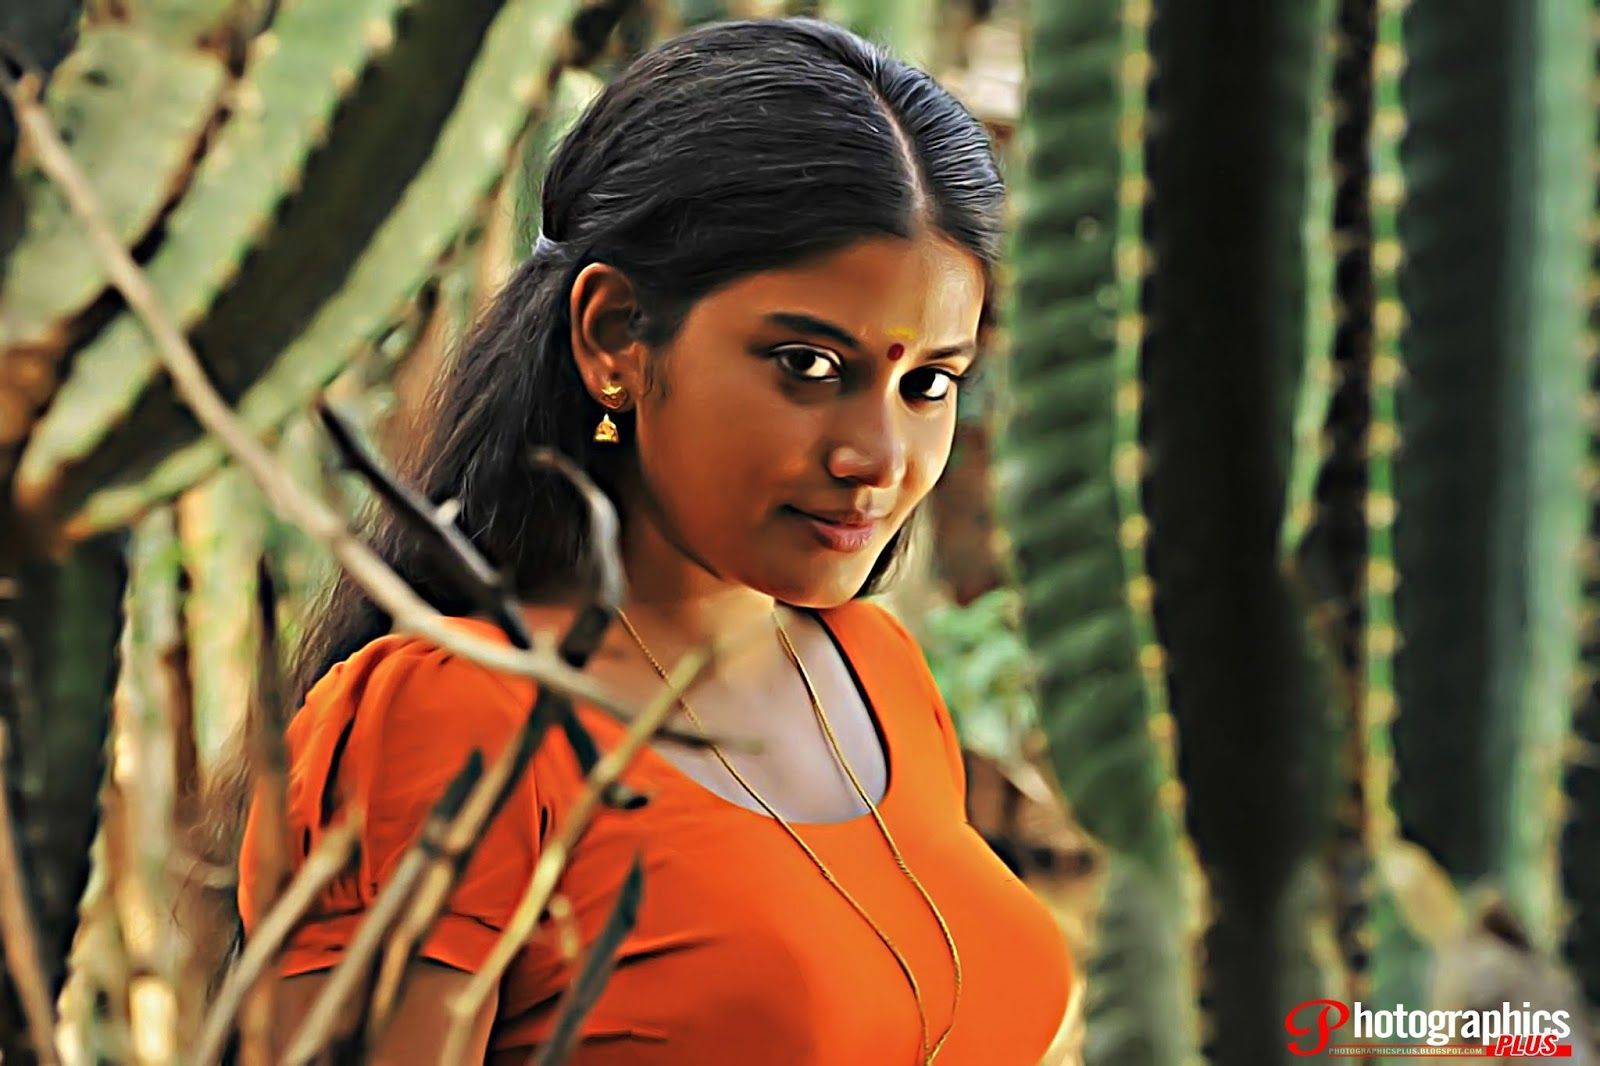 BEST DIGITAL ART MALAYALAM VILLAGE GIRL IN BLOUSE CLOSEUP VIEW EXCLUSIVE WALLPAPER. PHOTOGRAPHICS PLUS. Actresses, Tamil actress photo, Village girl